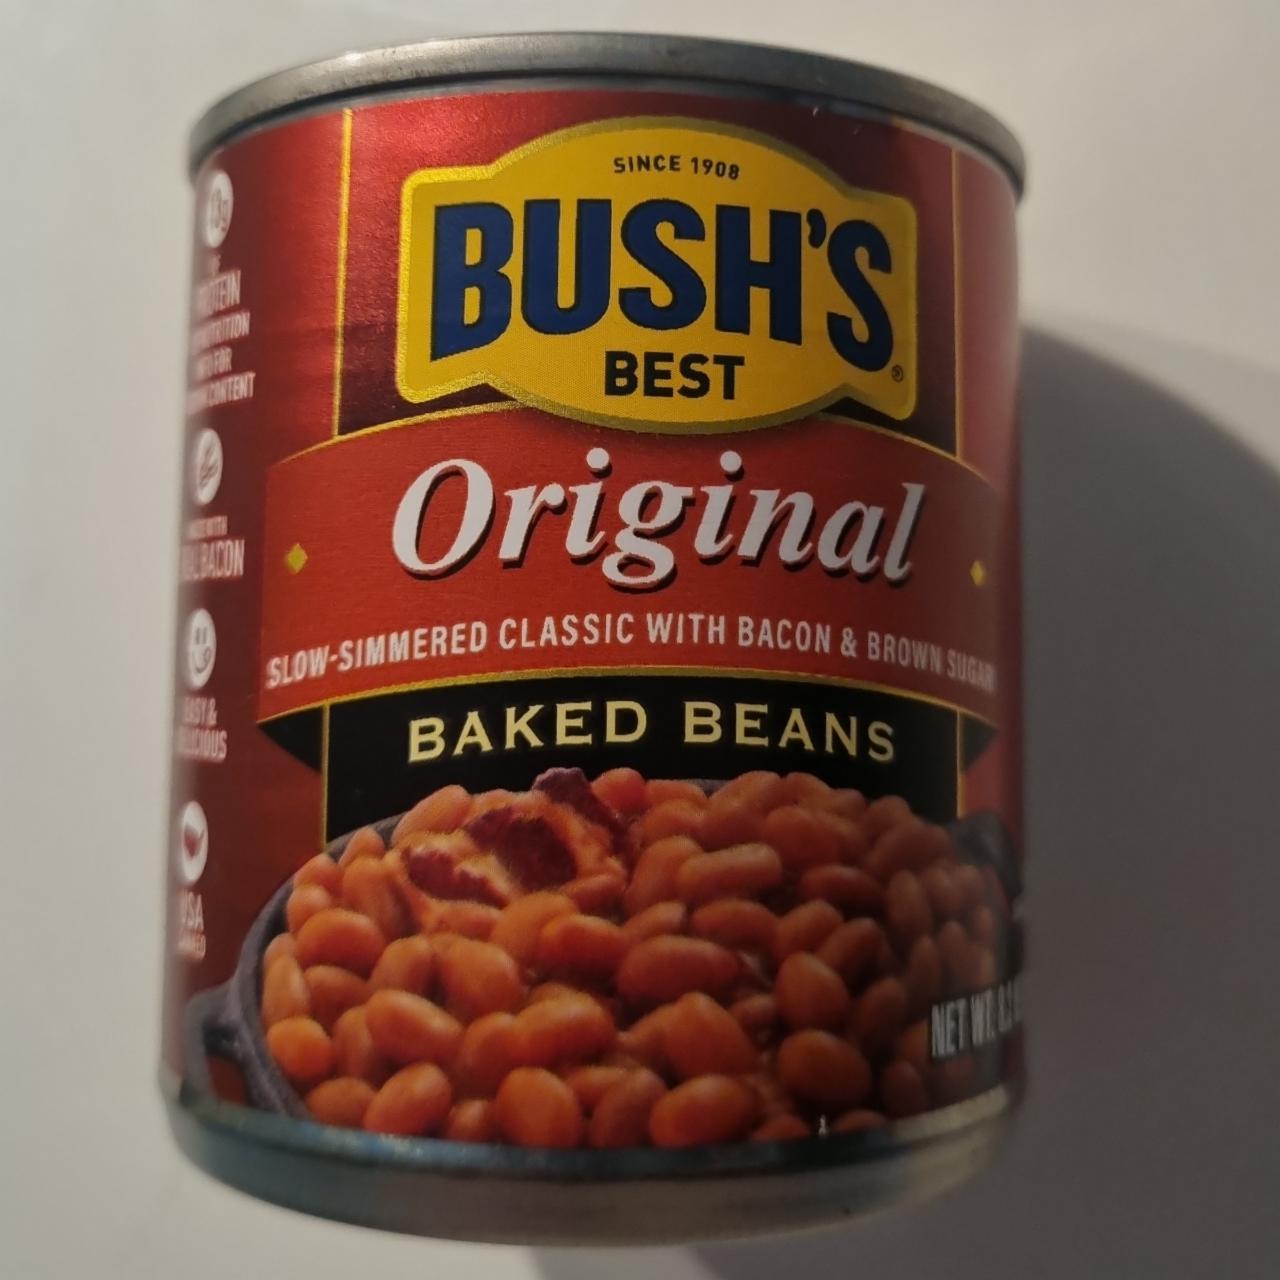 Fotografie - Original Baked Beans with bacon & brown sugar Bush's best